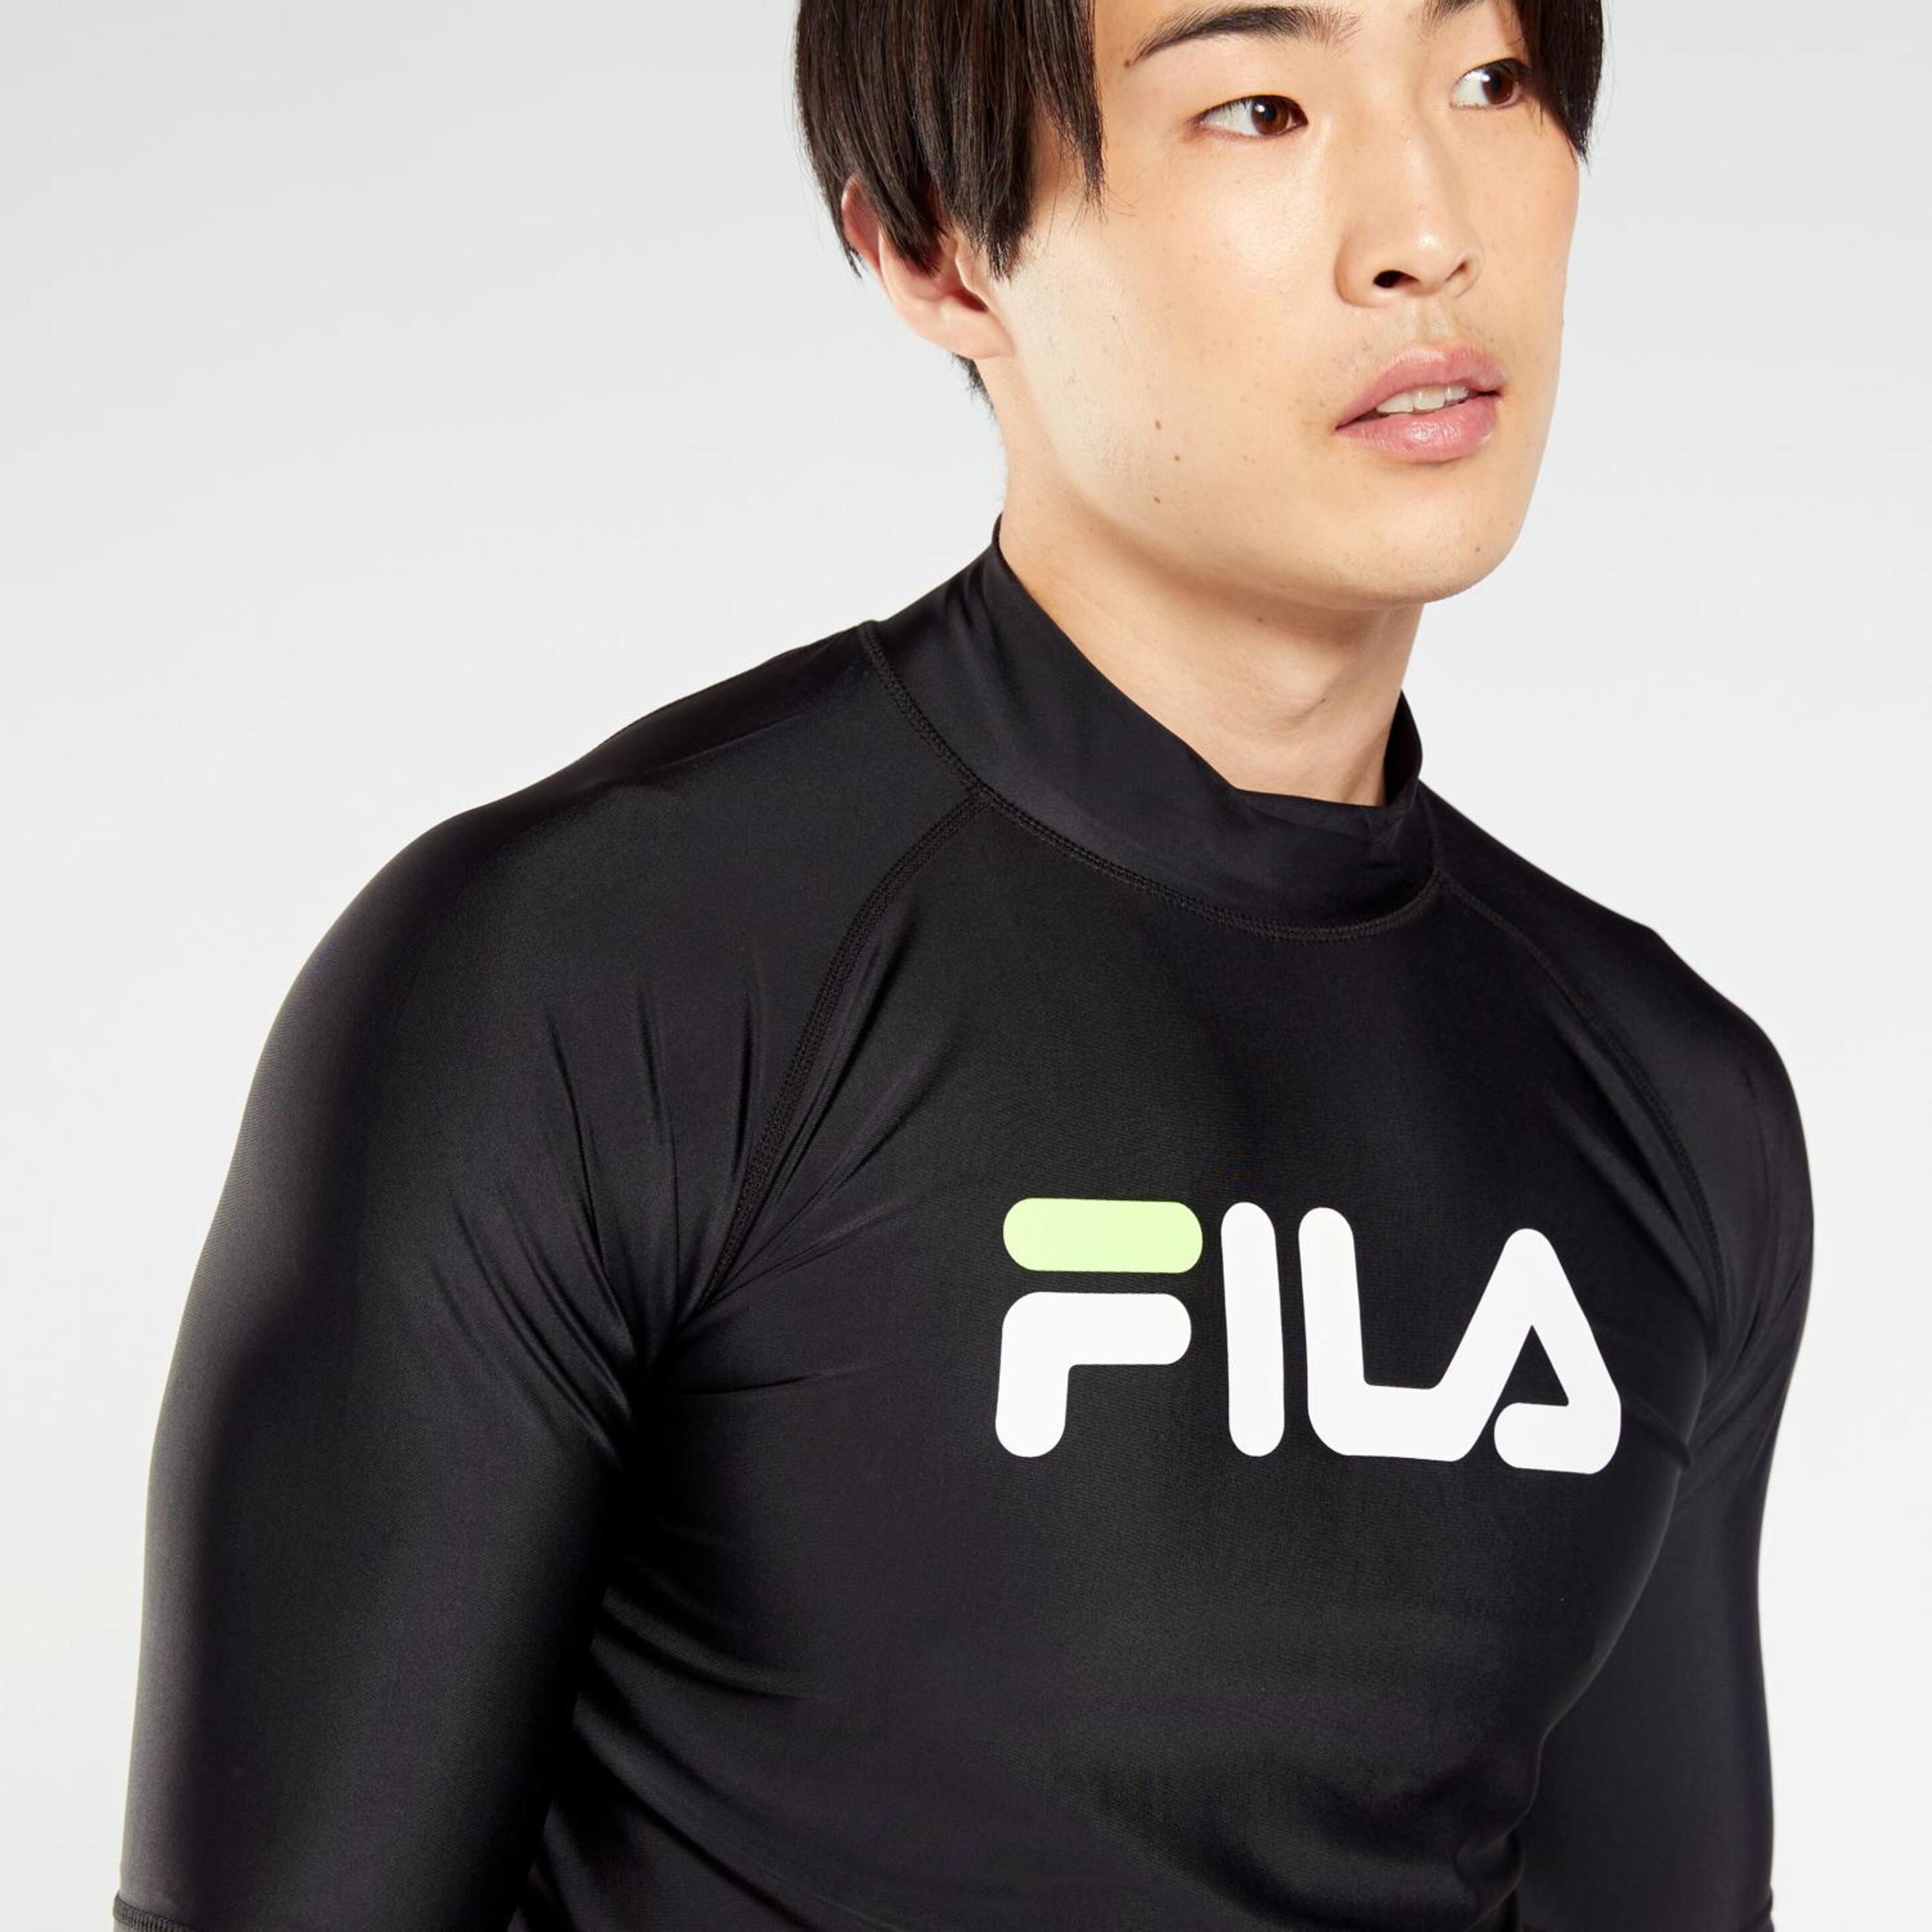 Fila Surf - Negro - Camiseta Surf Hombre